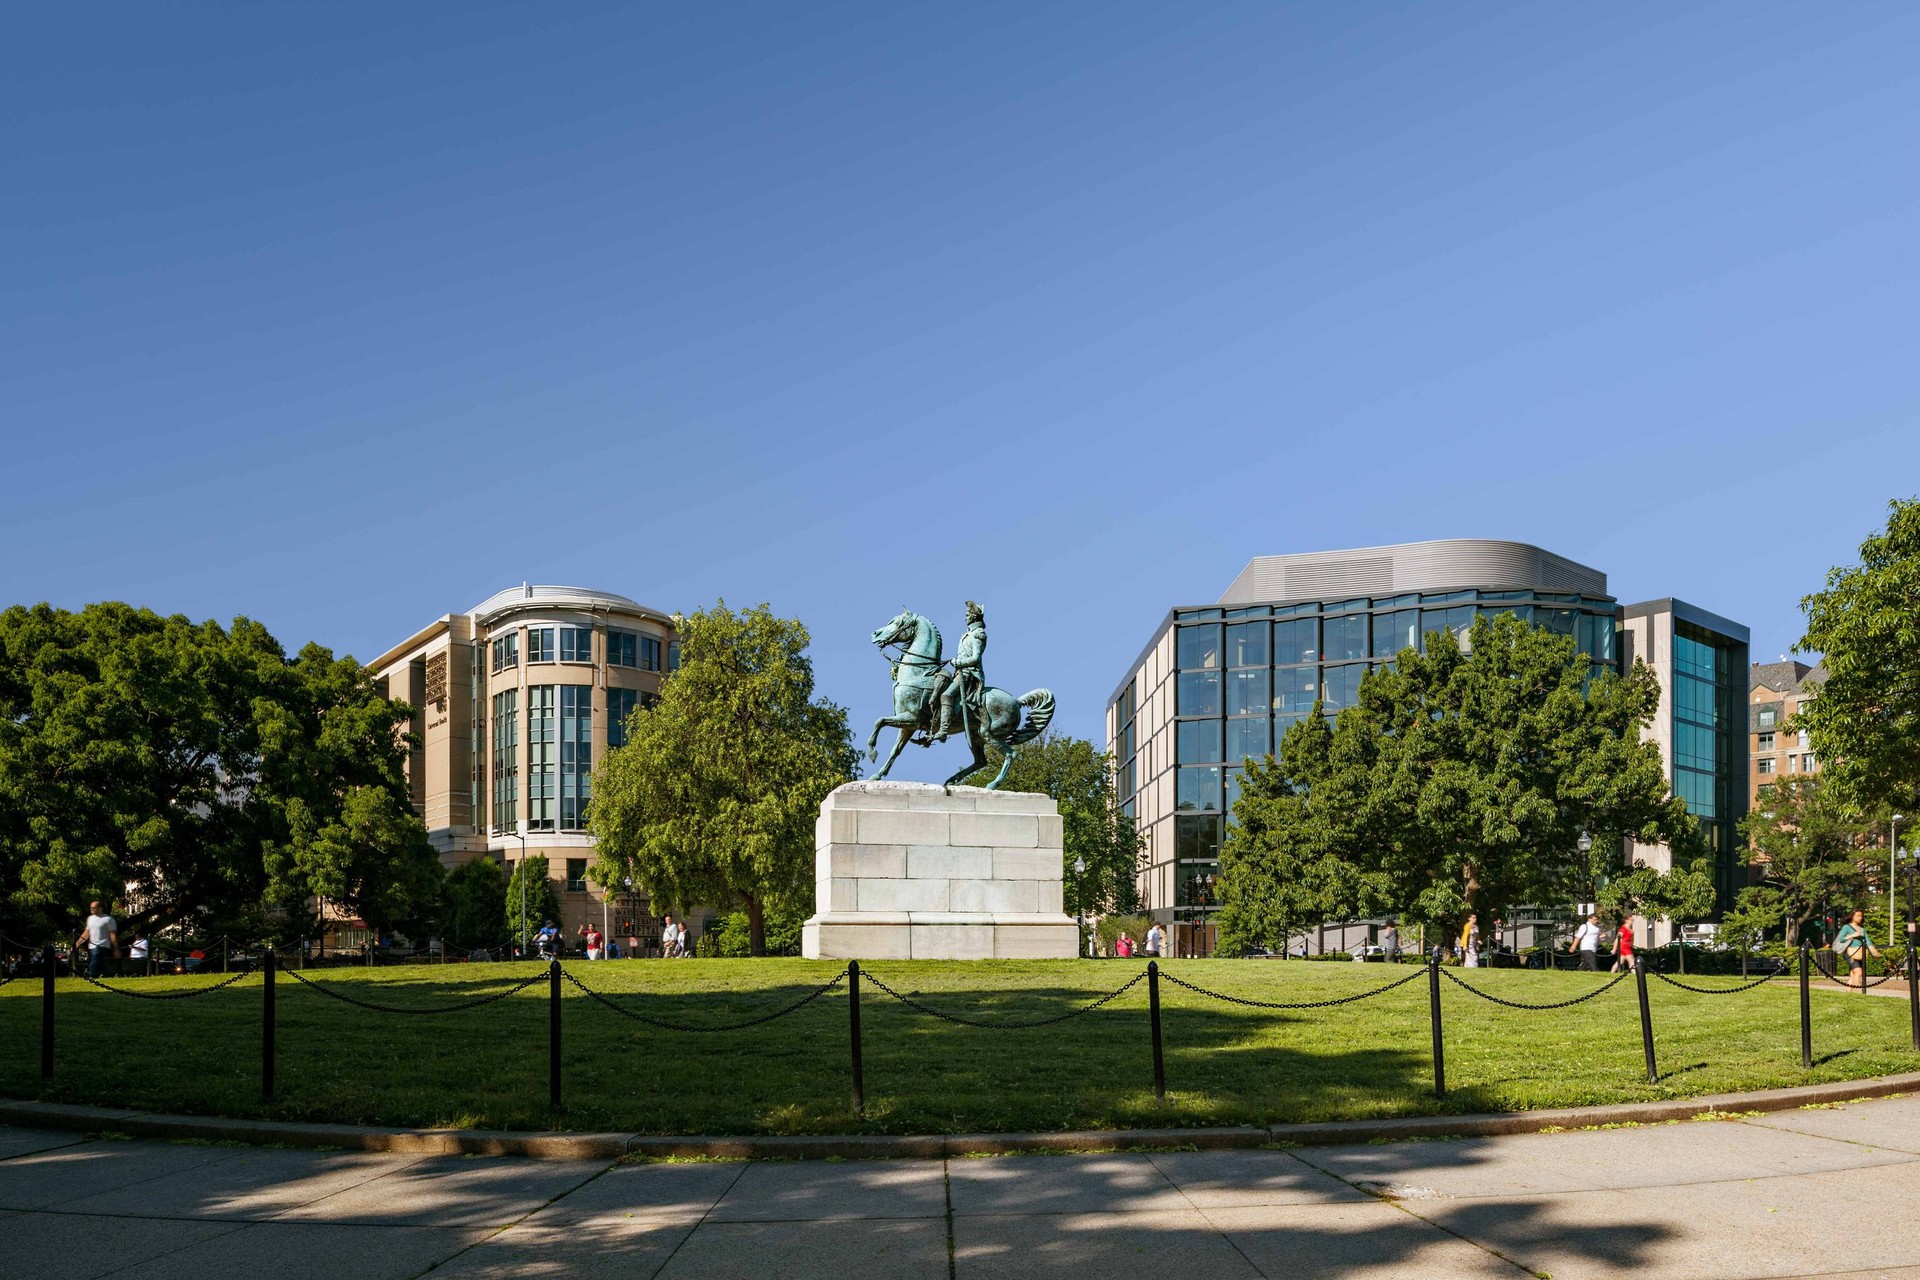 Statue of Lieutenant General George Washington on the GWU campus